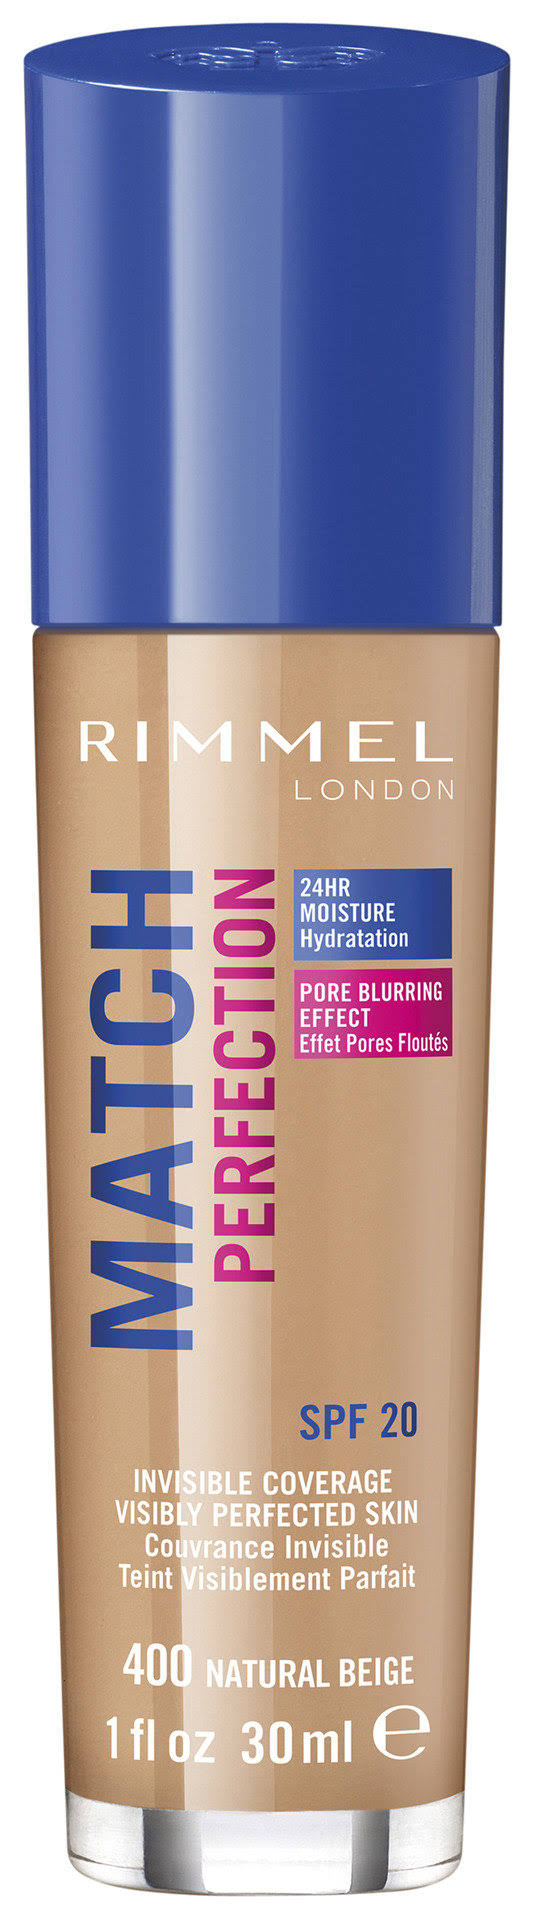 Rimmel London Match Perfection Liquid Foundation - SPF 20, 400 Natural Beige, 30ml